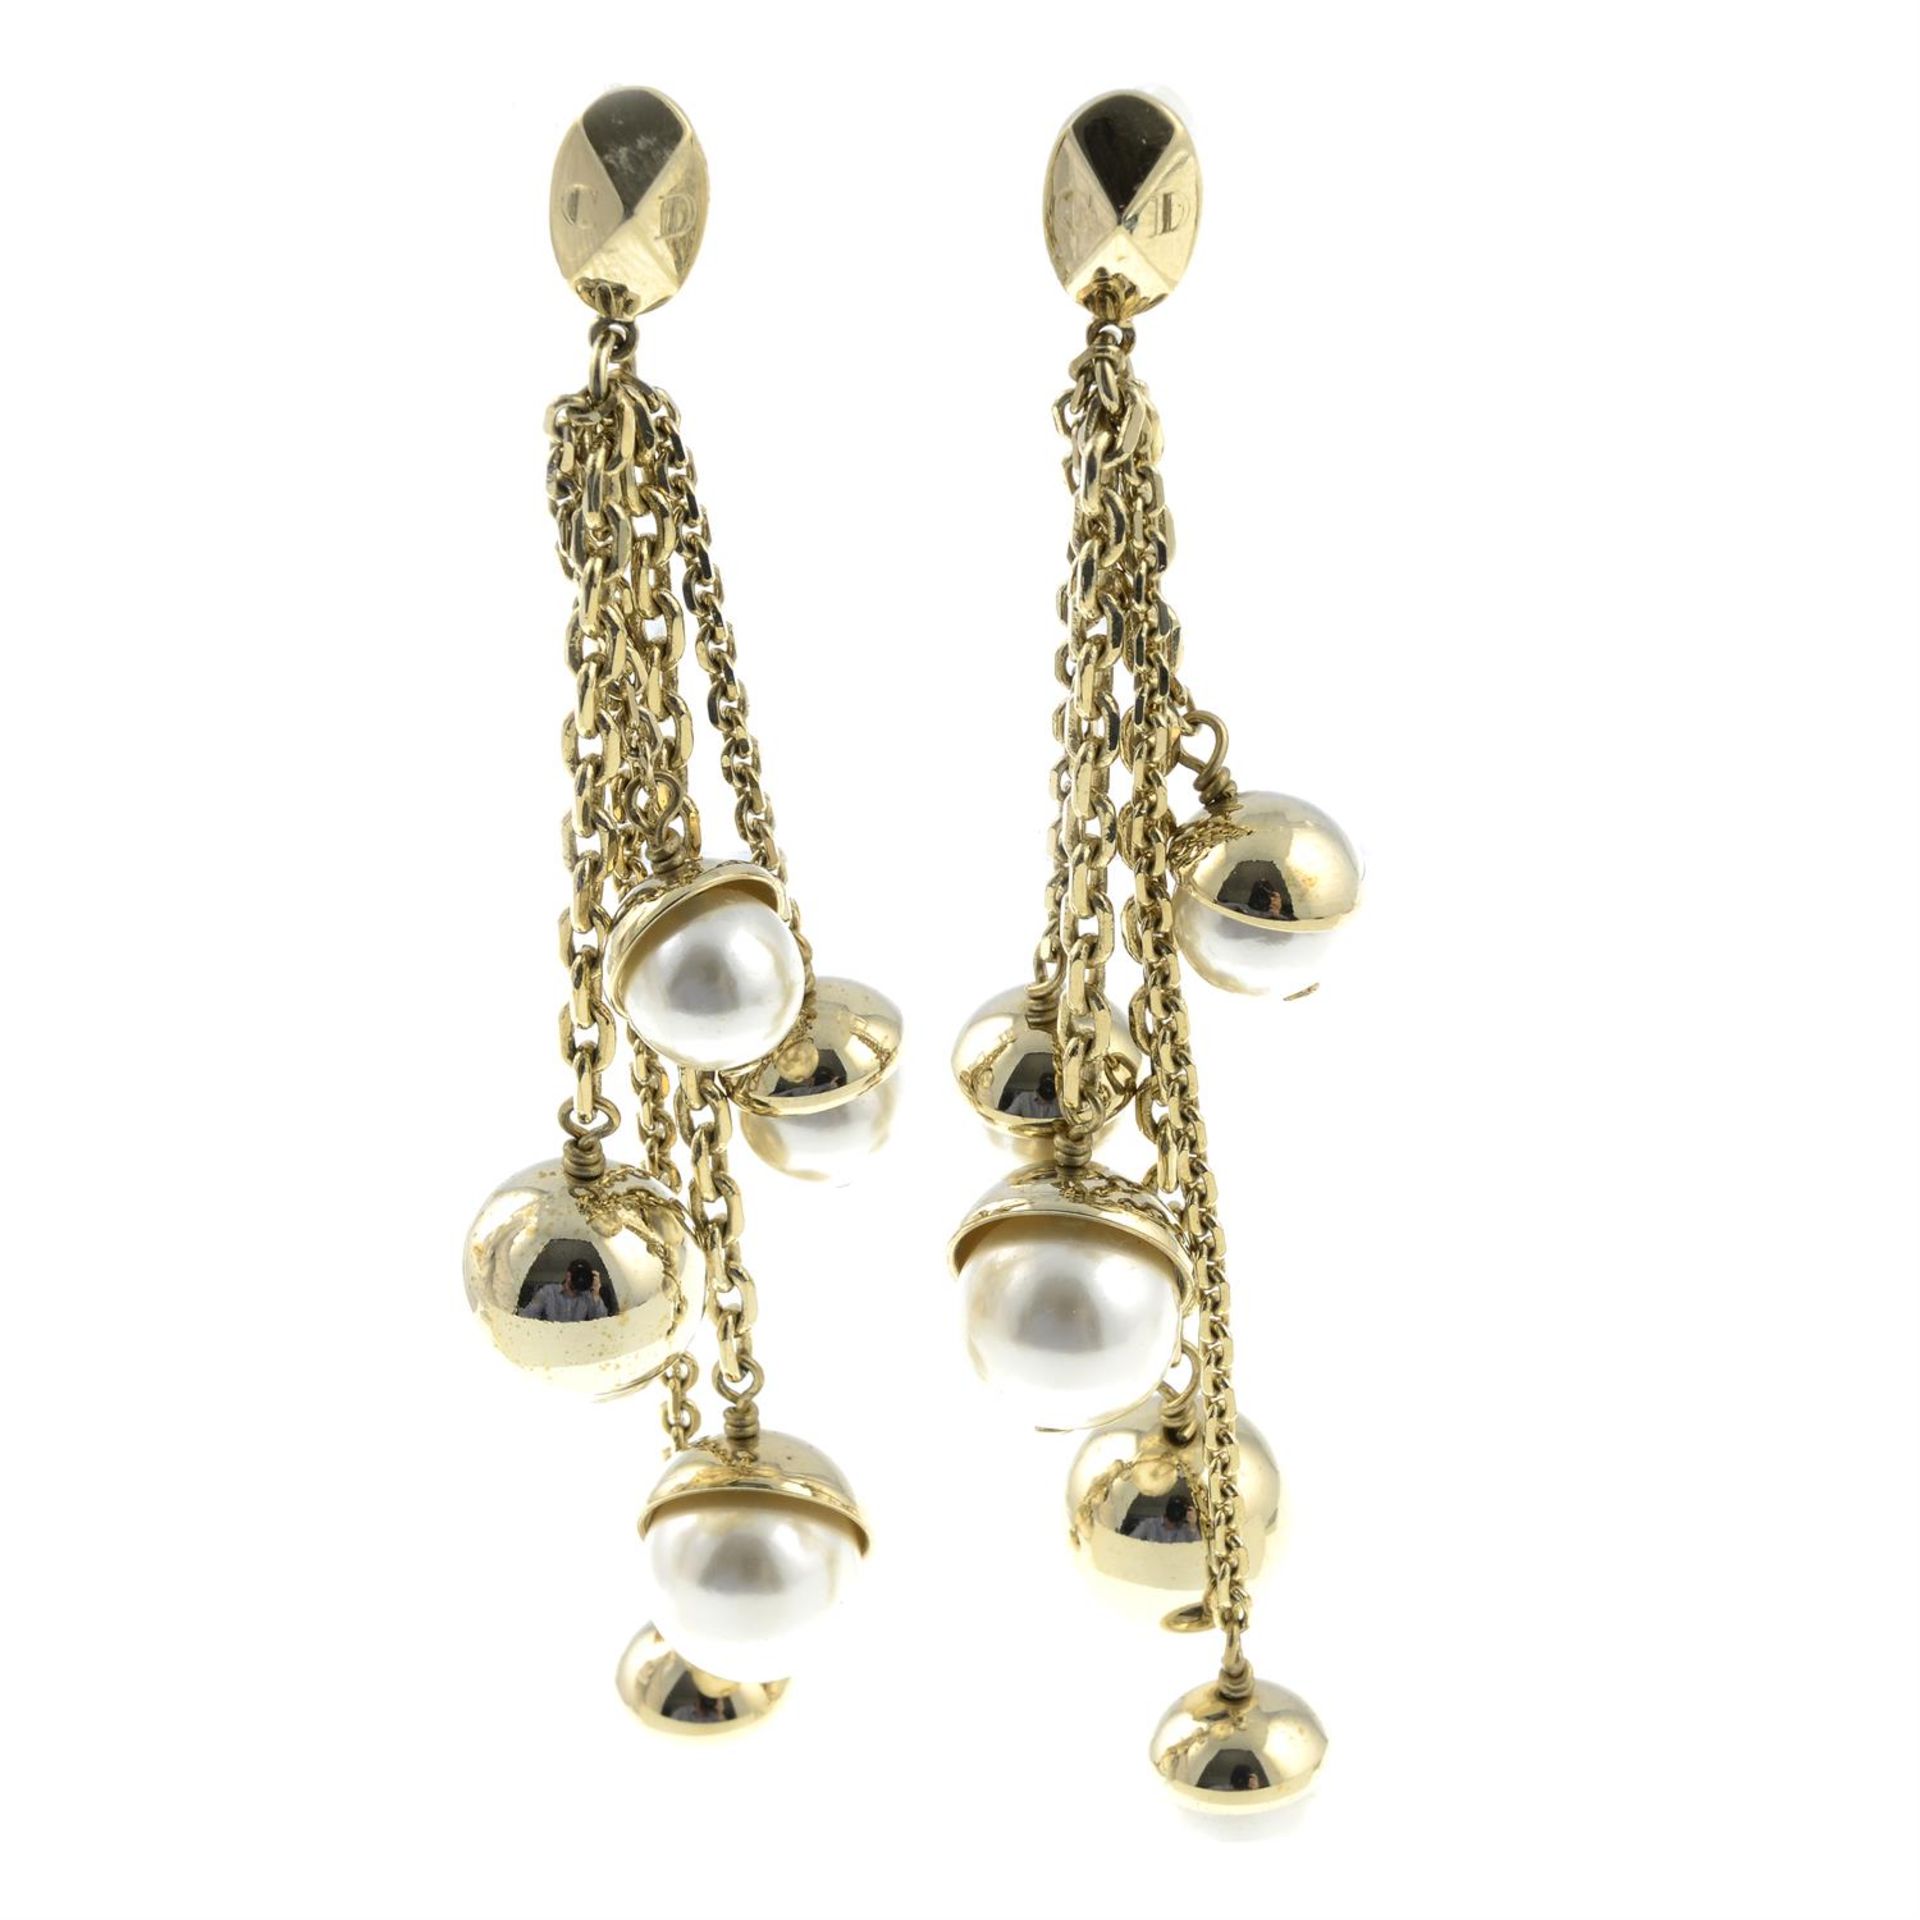 CHRISTIAN DIOR - a pair of imitation pearl drop earrings.